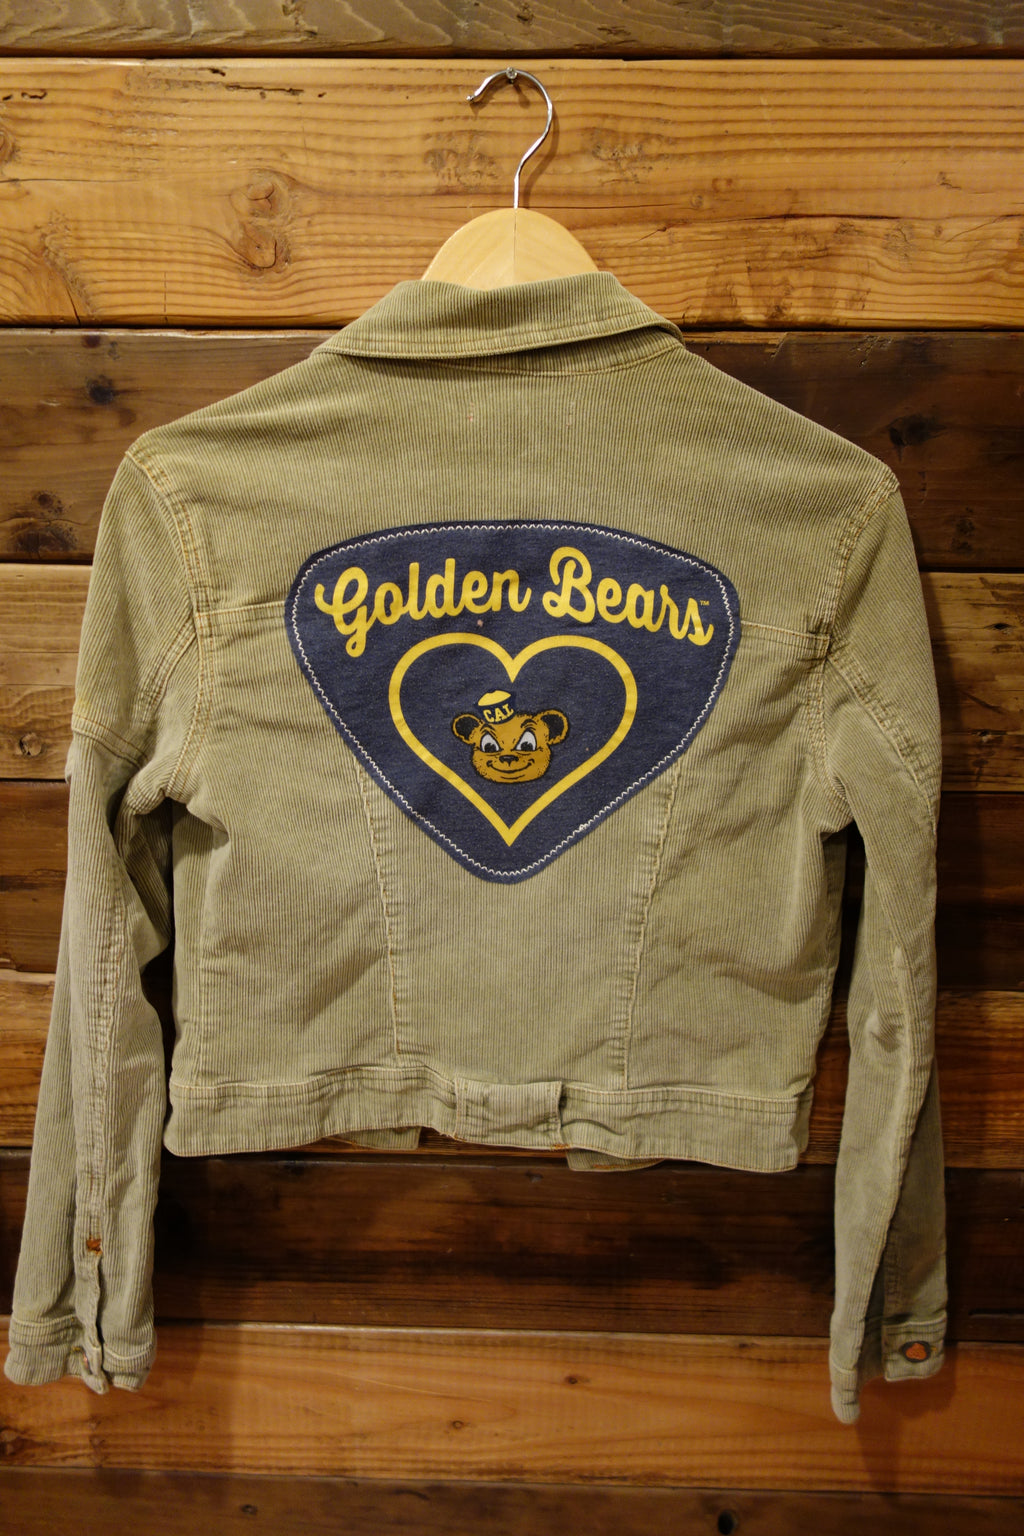 University of California Berkeley Golden Bears Betsy Johnson one of a kind vintage corduroy jacket 